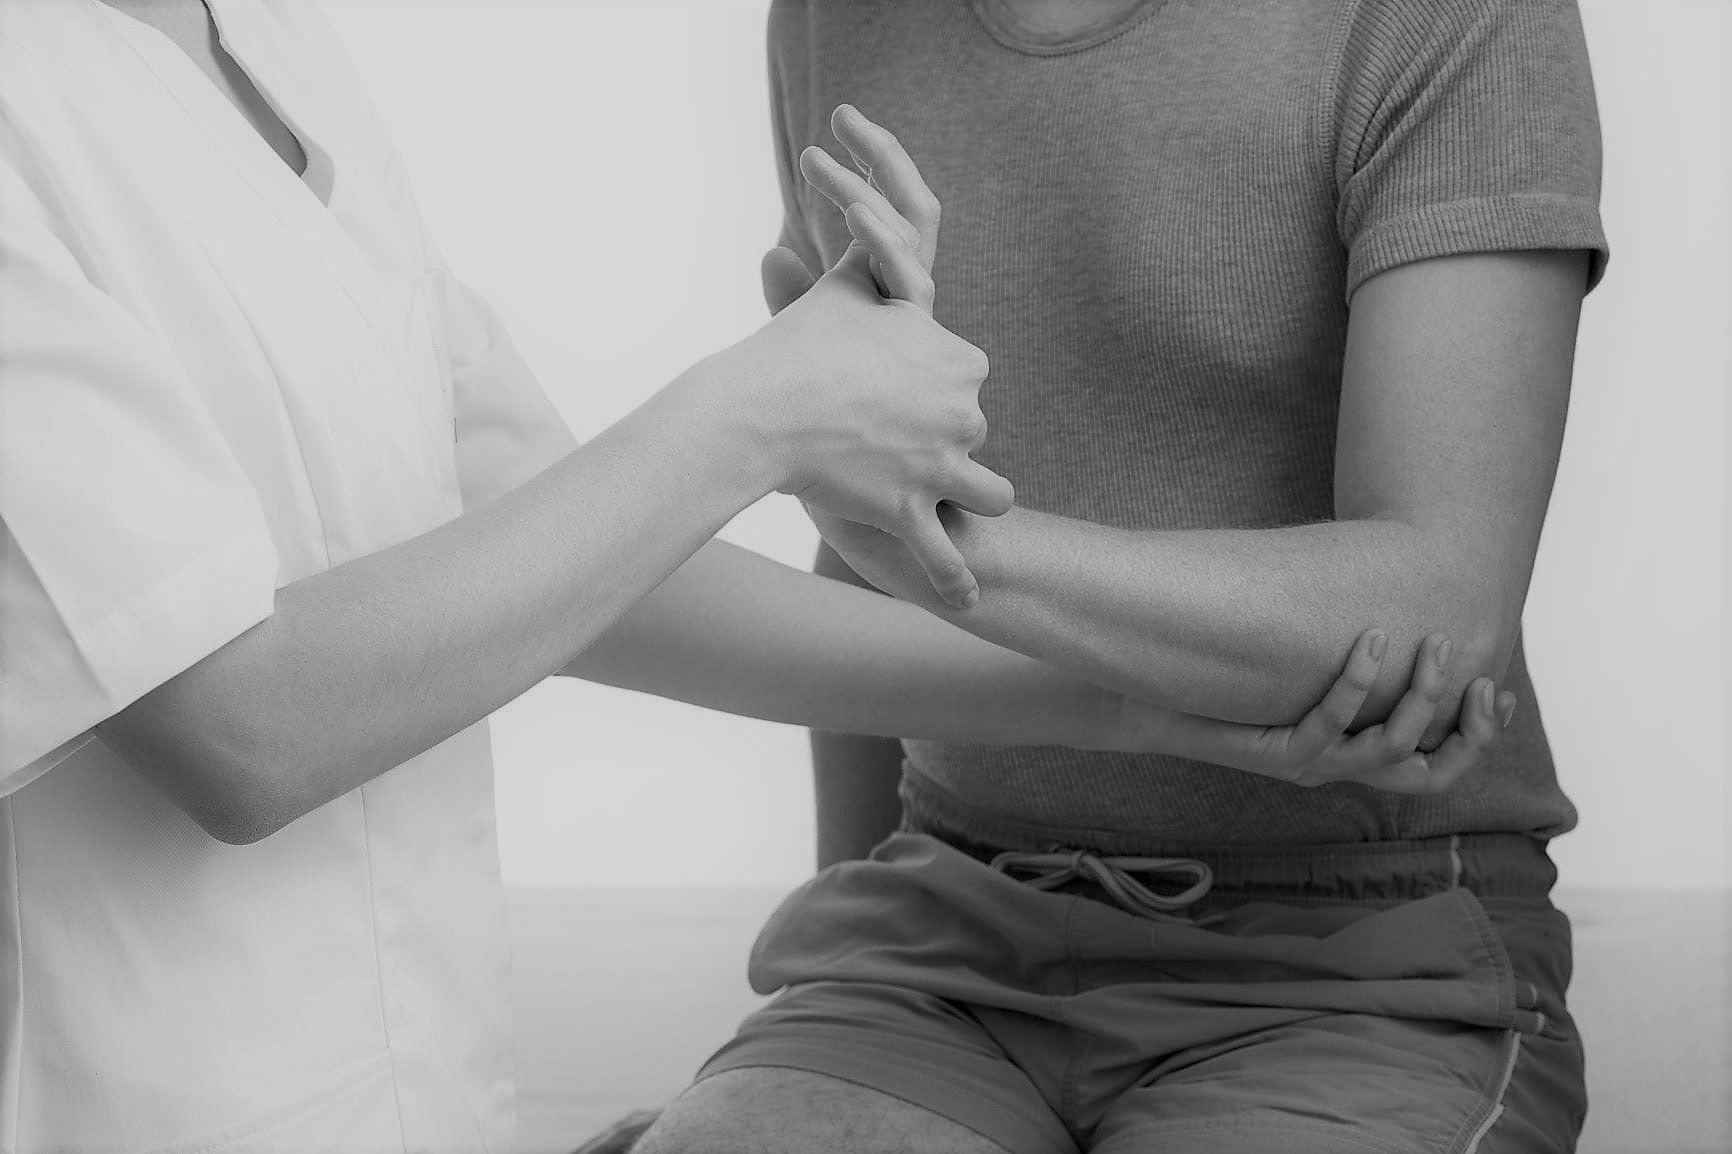 doctor helping patient stretch injured wrist